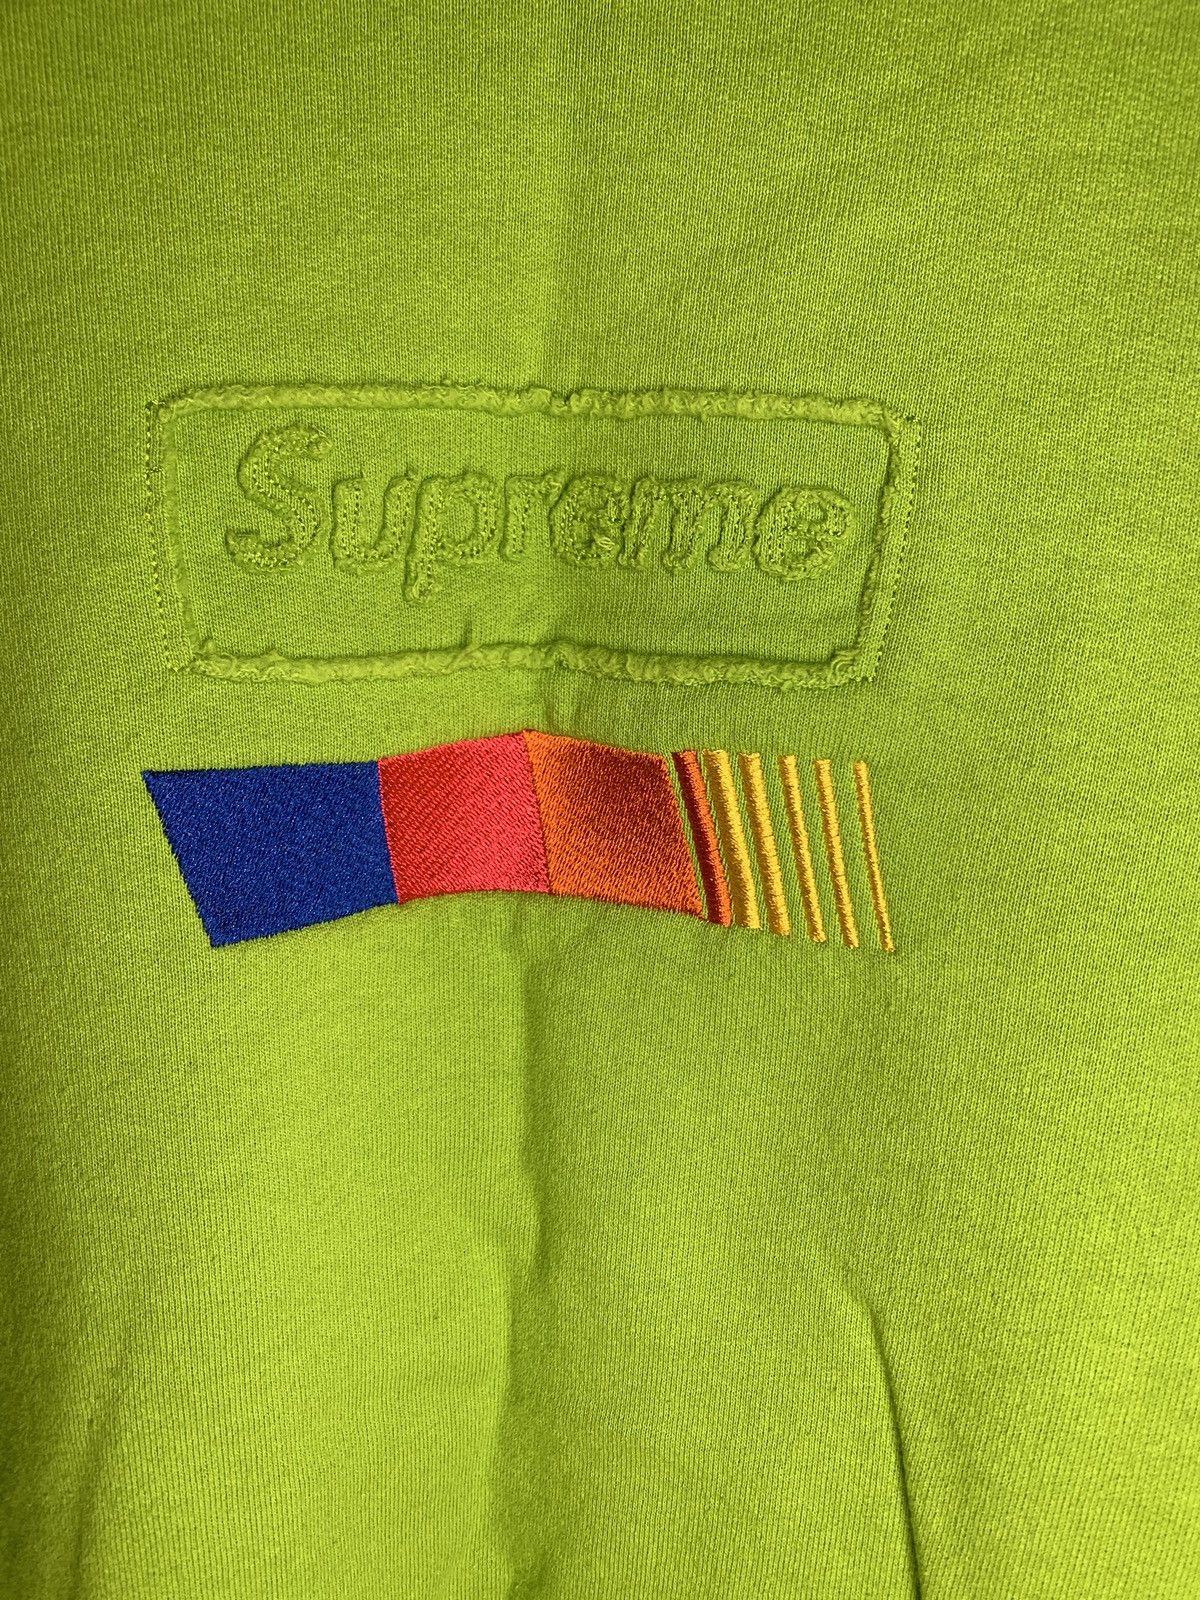 Supreme Lord Fubu custom Acid Green Supreme box logo Size US M / EU 48-50 / 2 - 7 Thumbnail